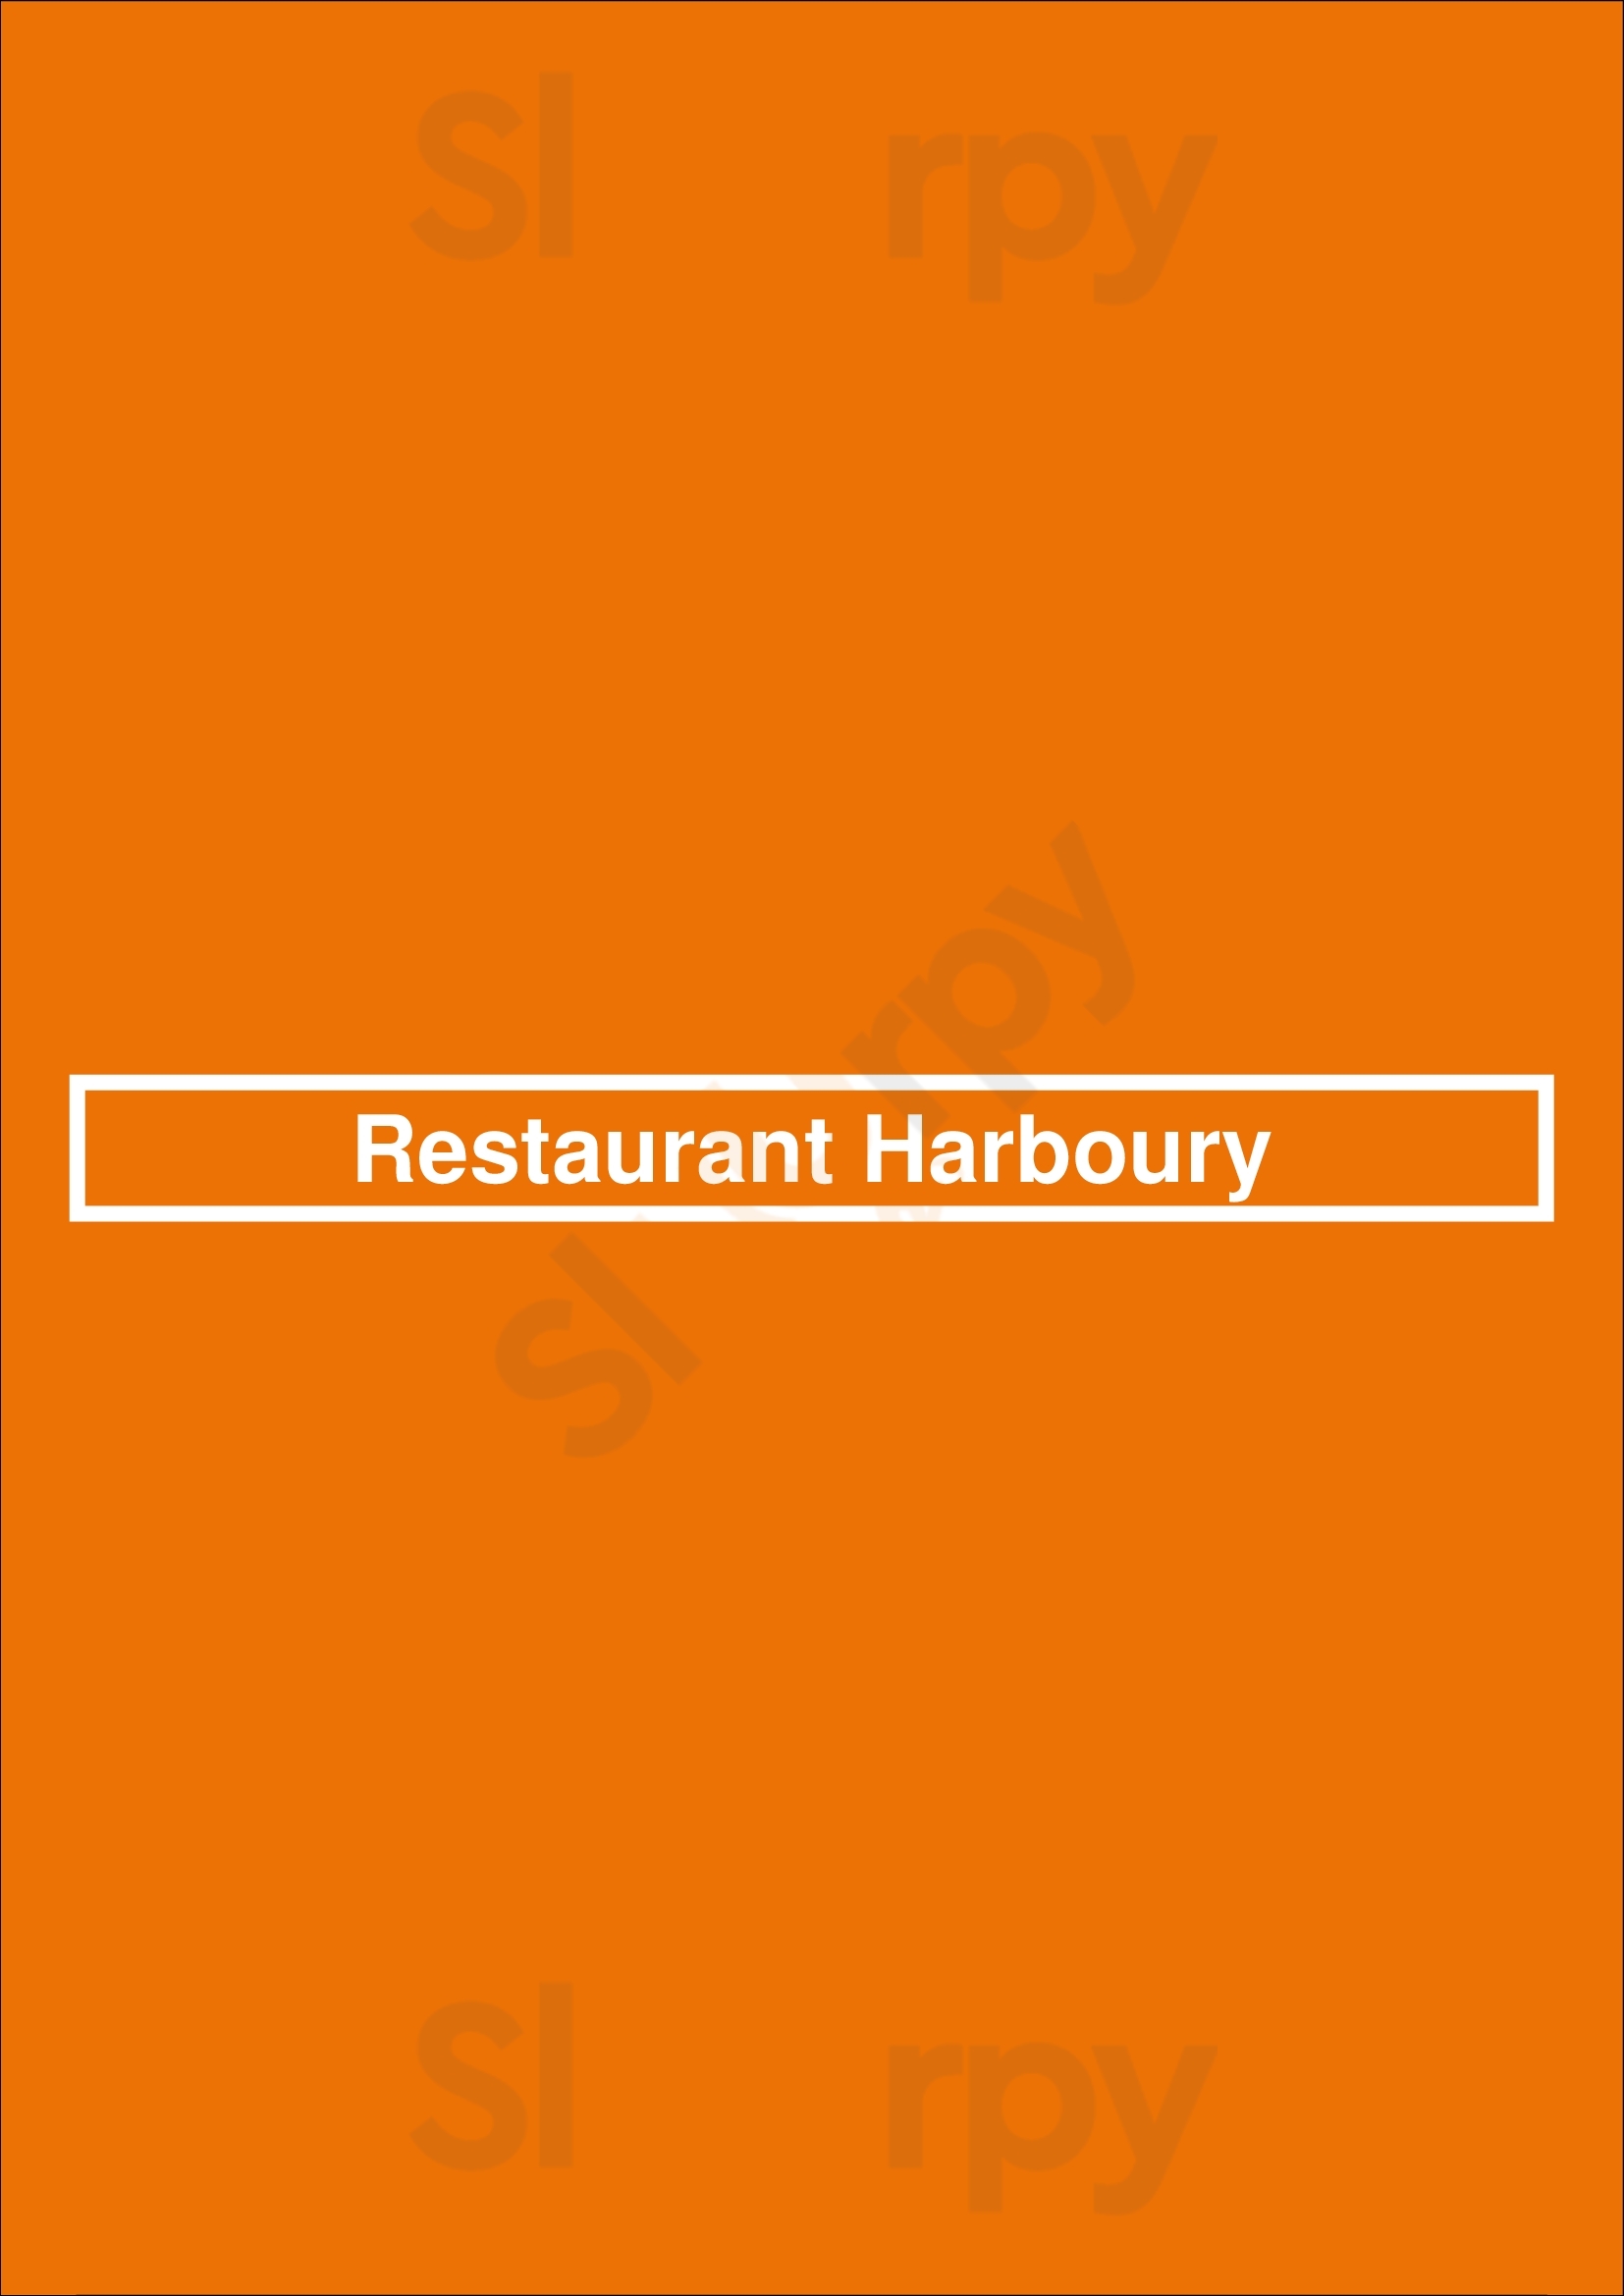 Restaurant Harboury Tilburg Menu - 1